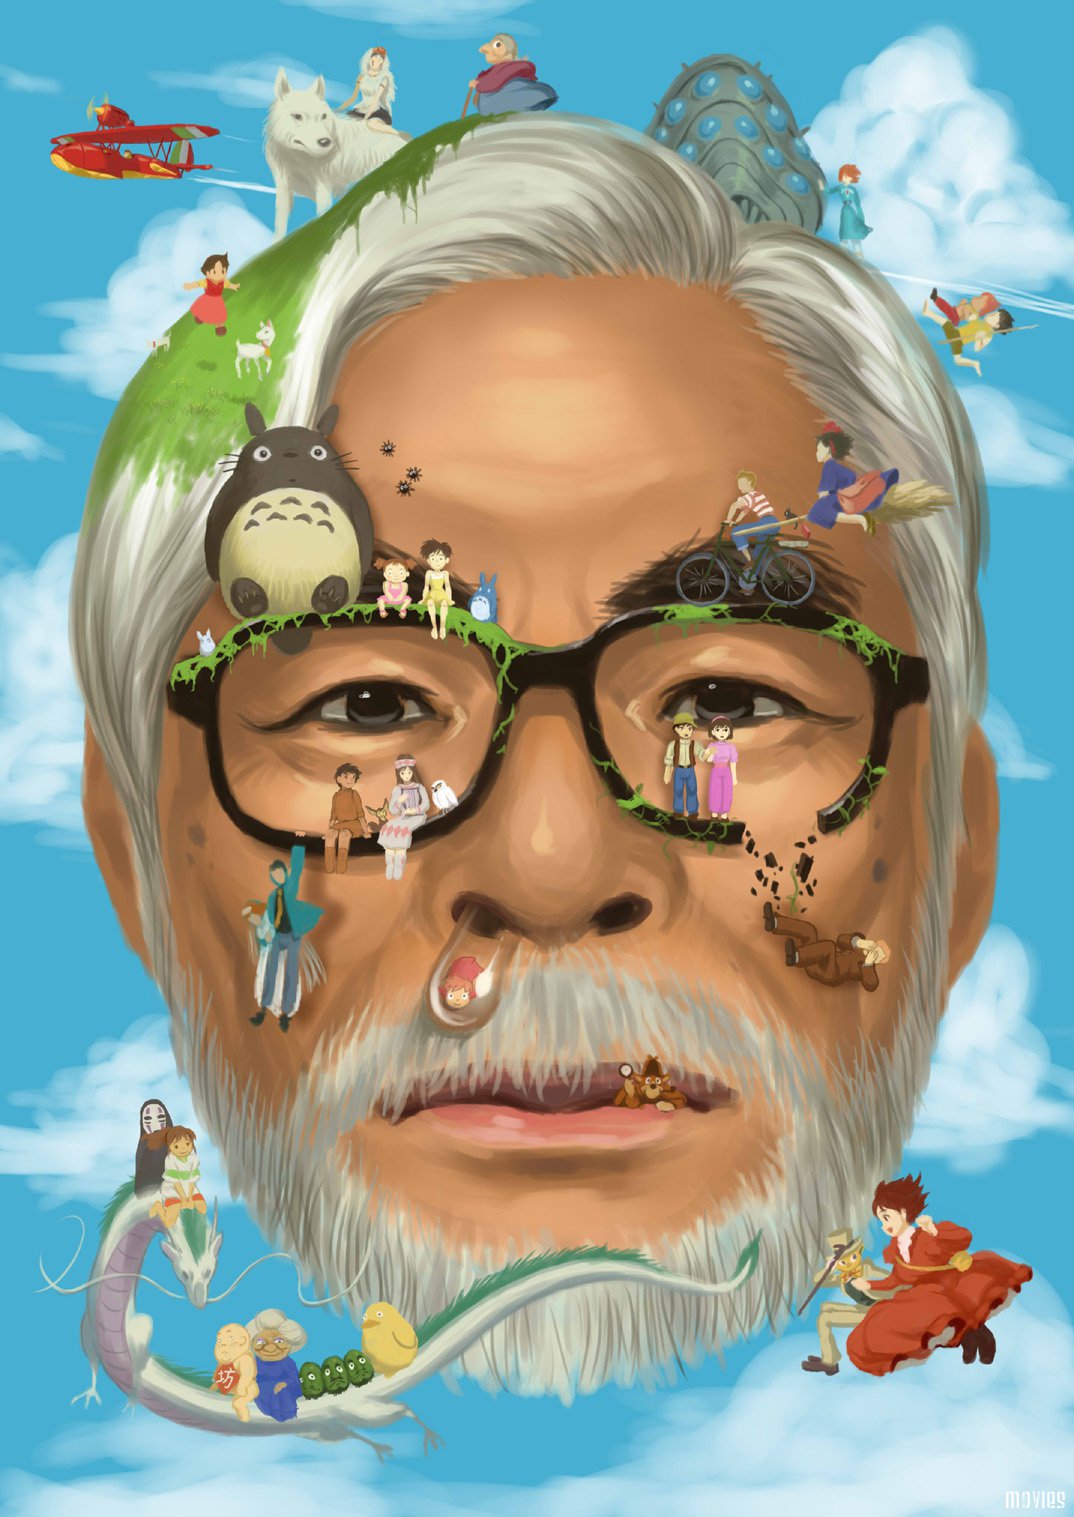 Director Hayao Miazaki and characters from Studio Ghibli films.